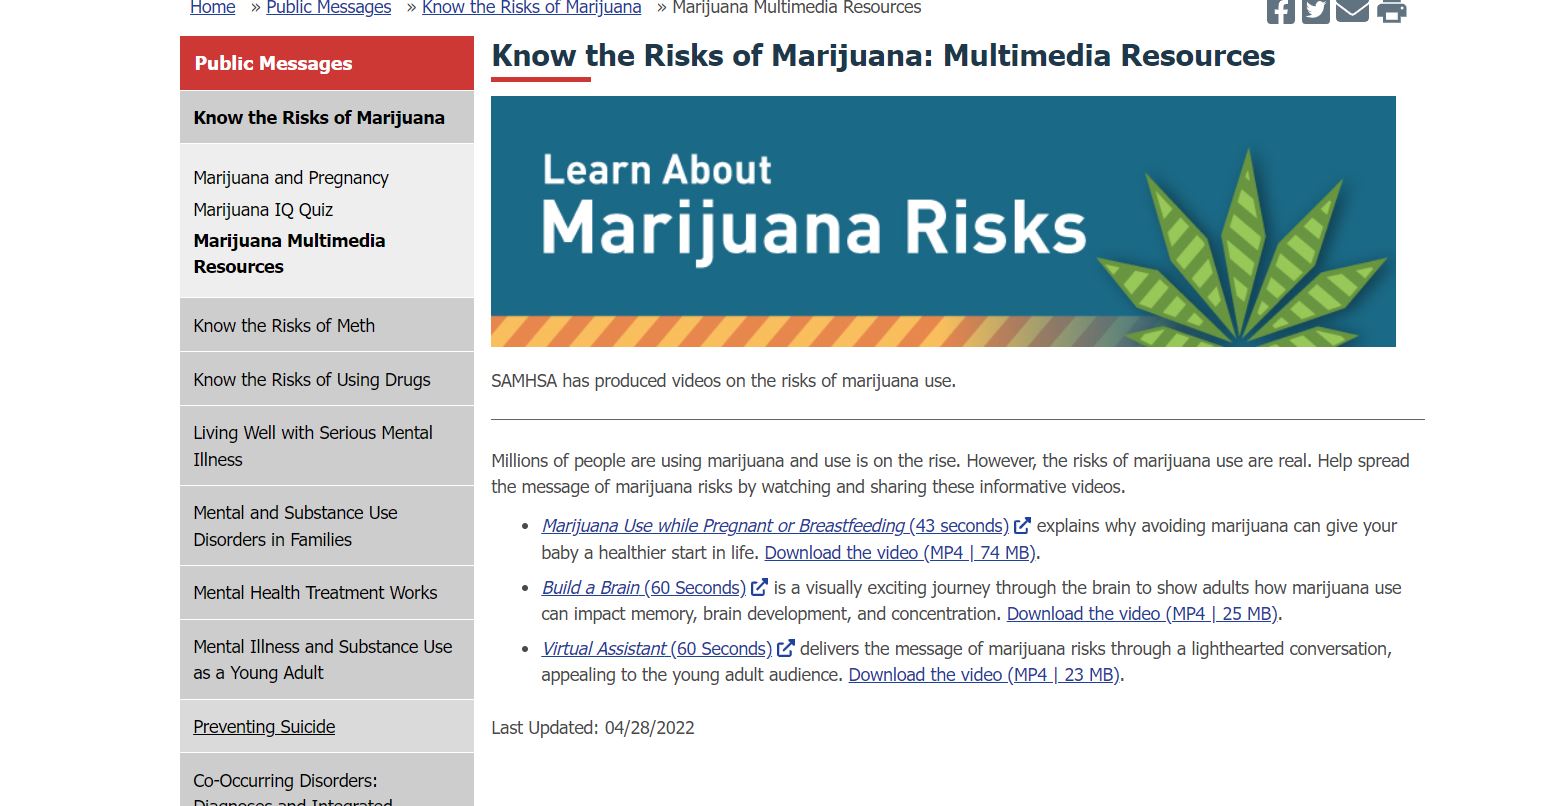 Know the Risks of Marijuana: Multimedia Resources